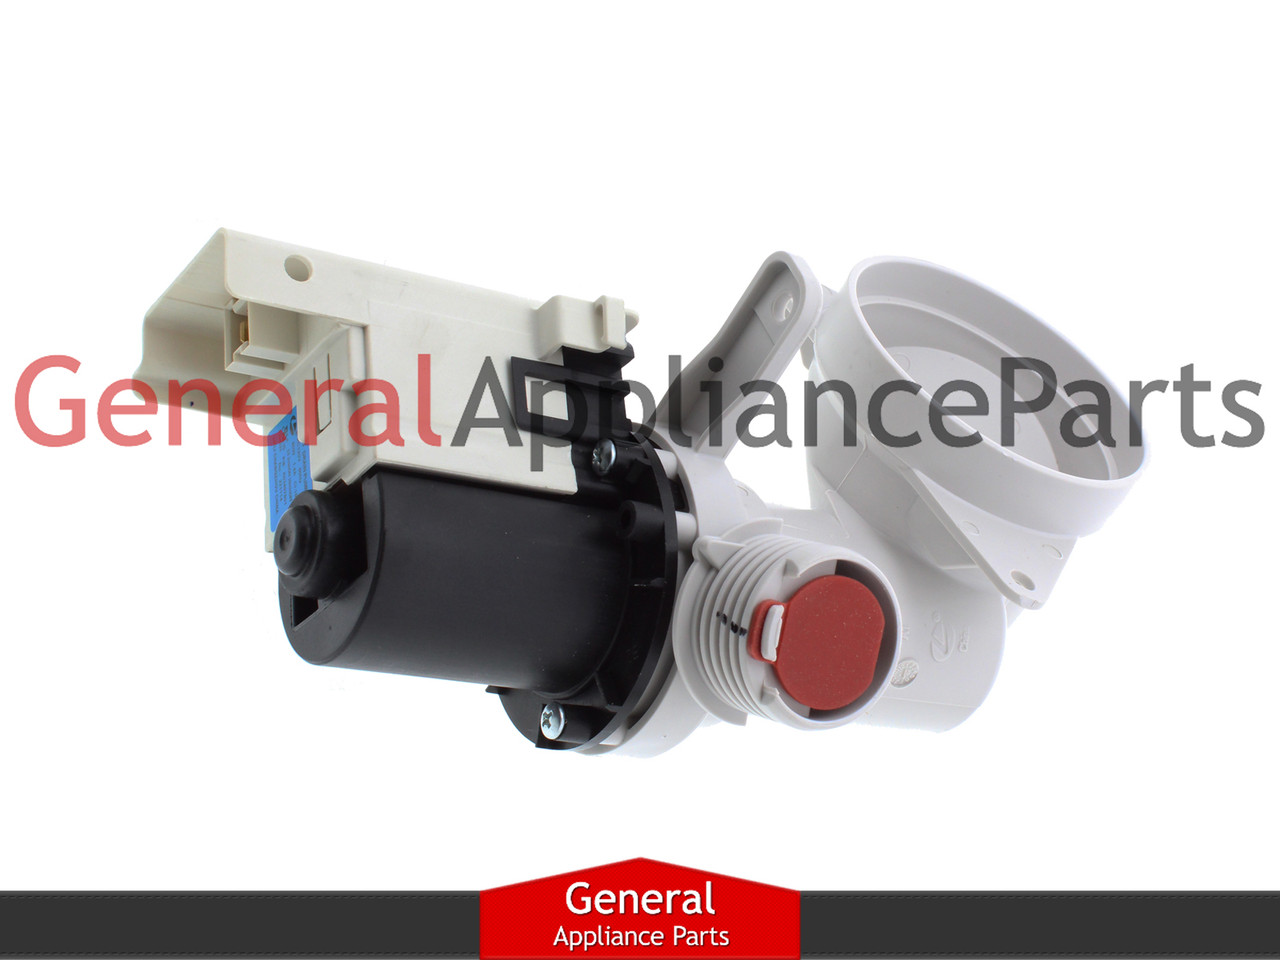 Washer Drain Pump replaces Frigidaire Electrolux # AP6031233 4452364  PS11766082 - General Appliance Parts